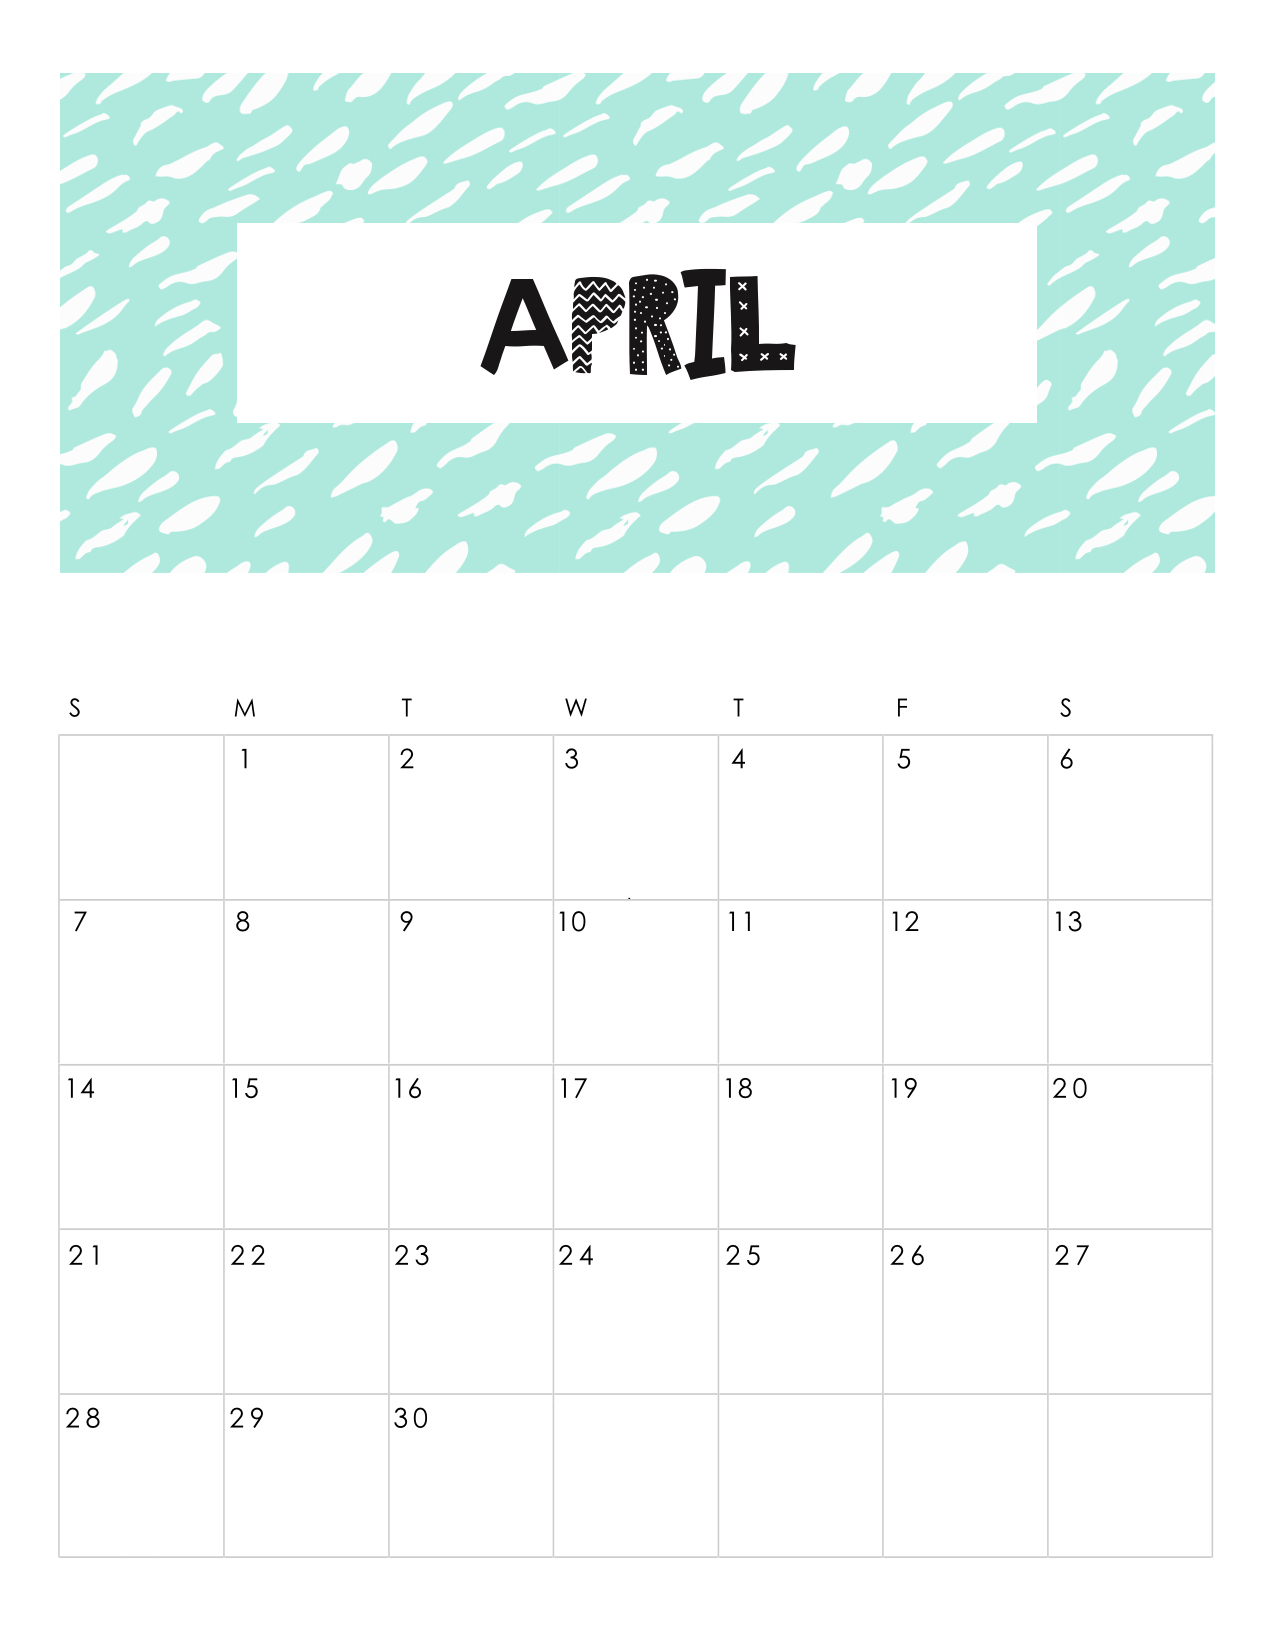 free-printable-abstract-patterned-calendar-april-2019.jpg